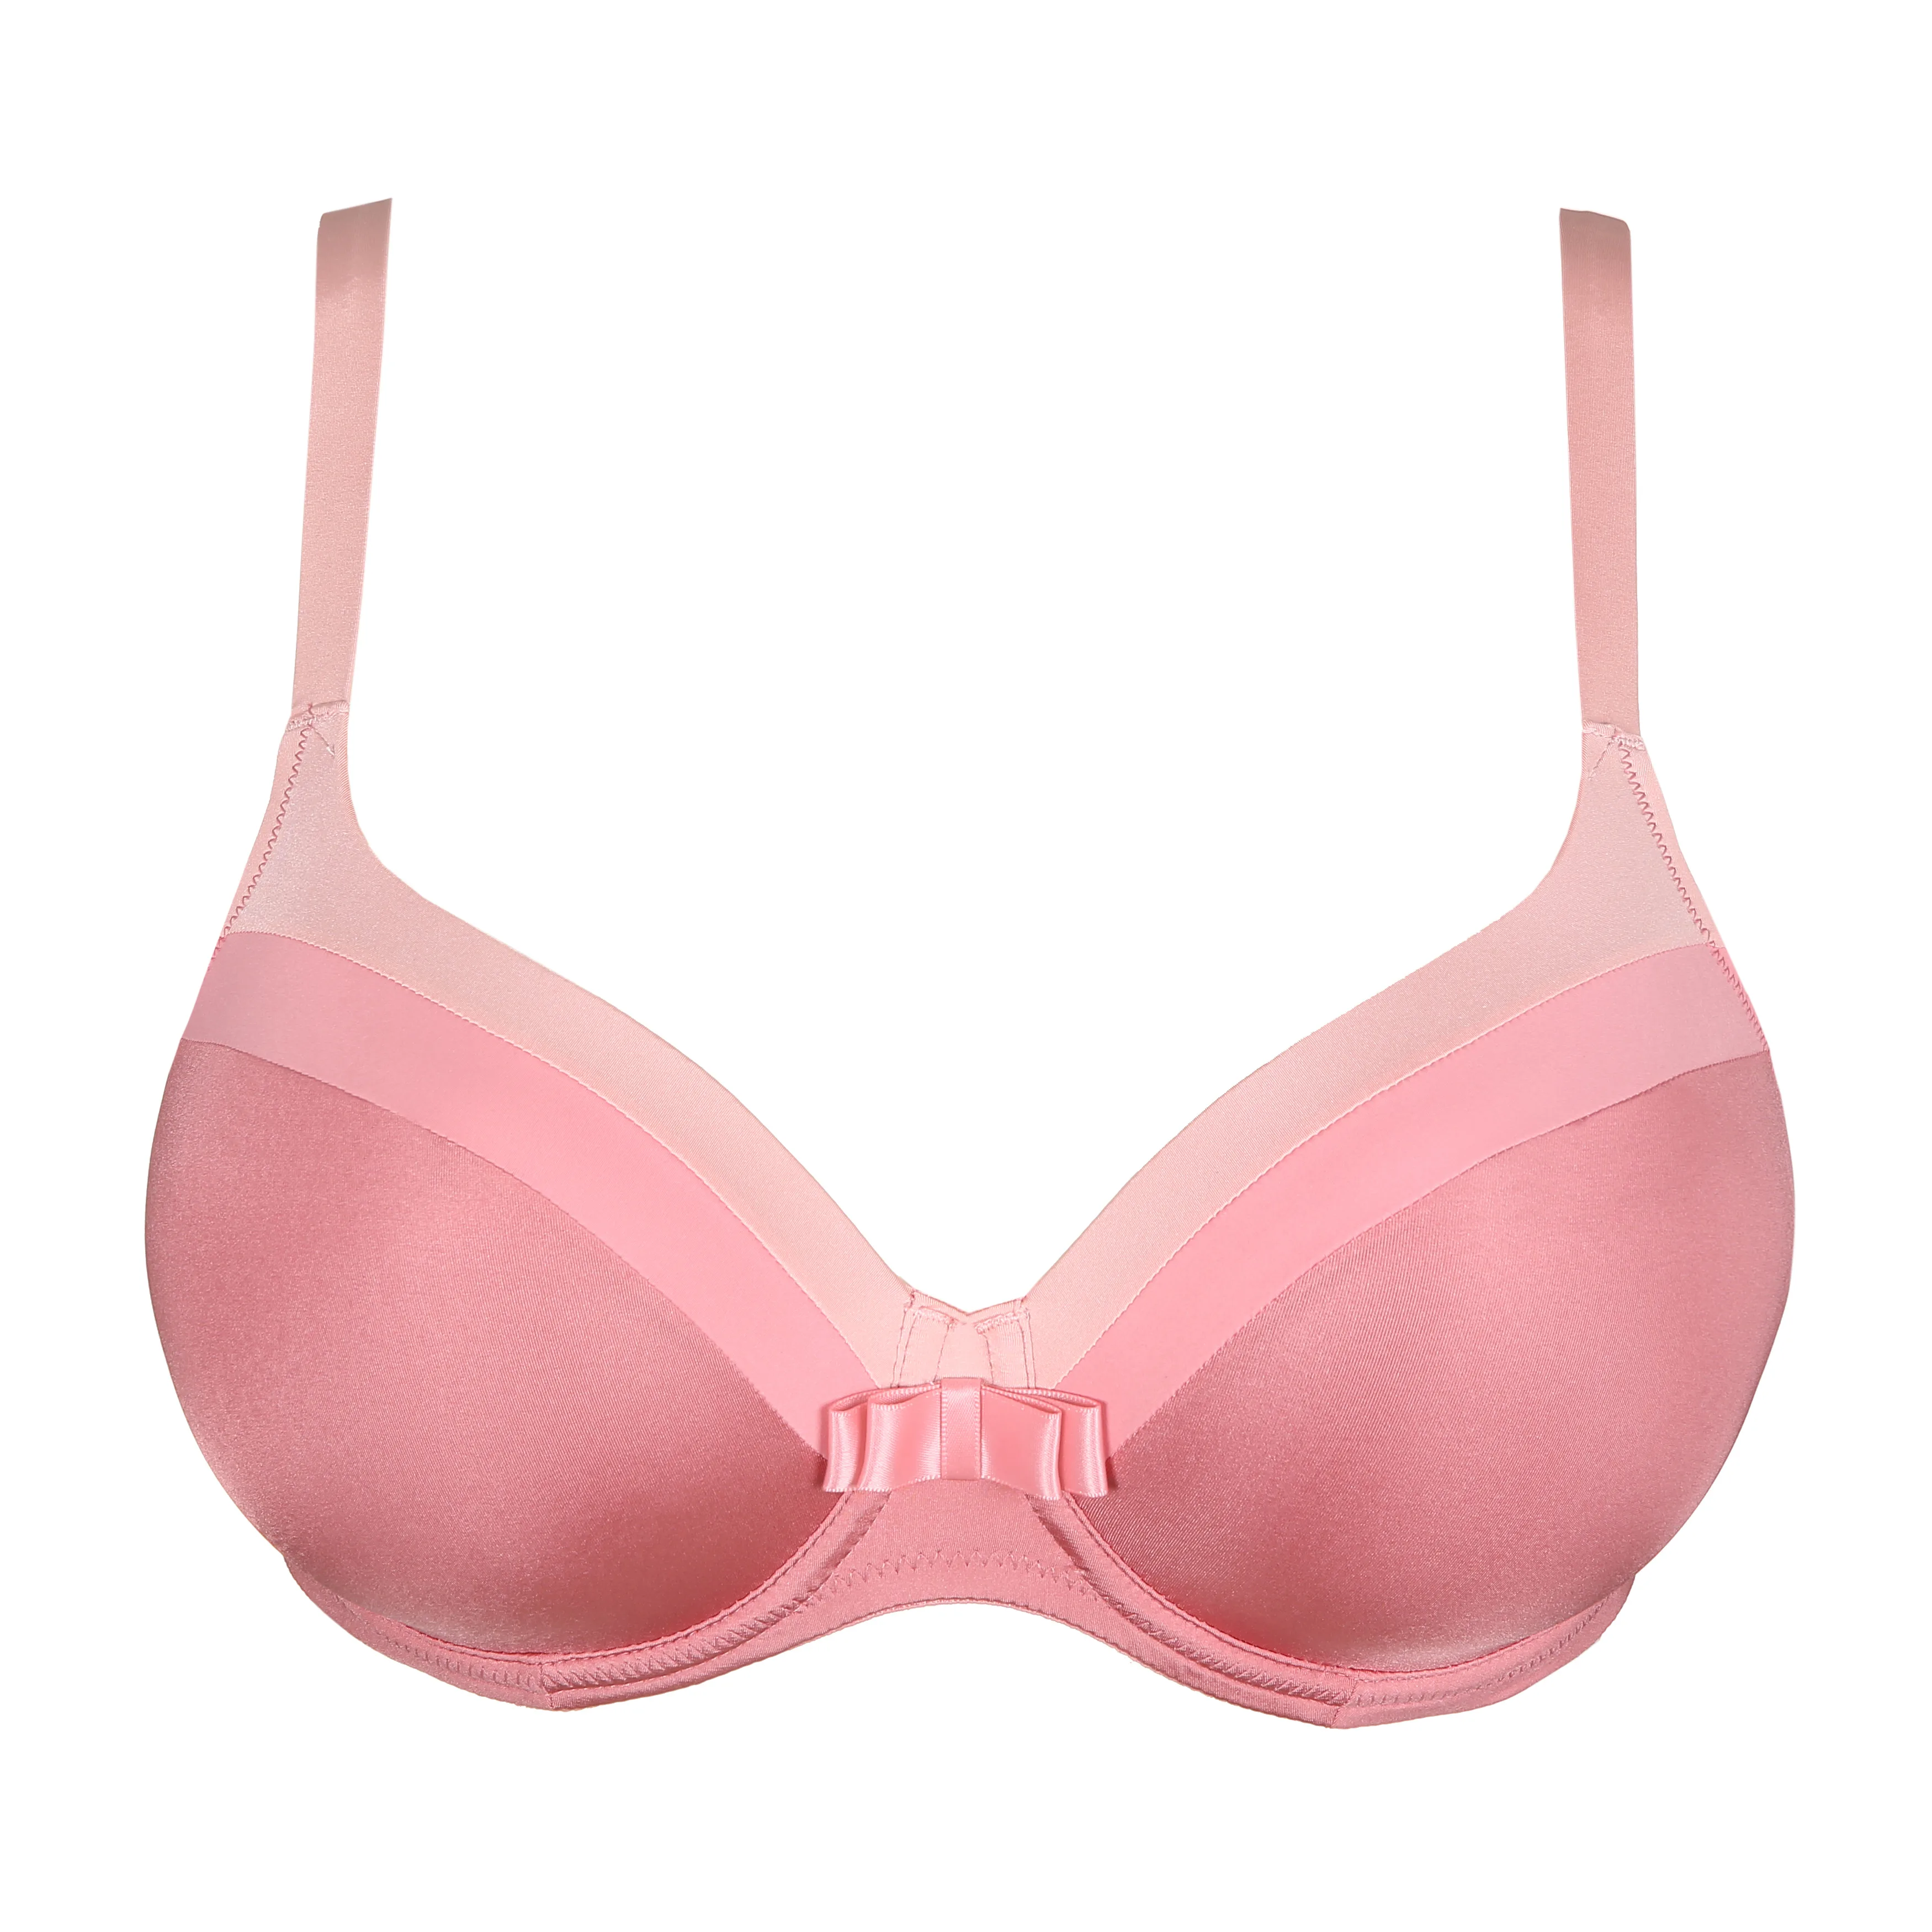 PrimaDonna Twist VERAO L.A. Pink padded bra heartshape